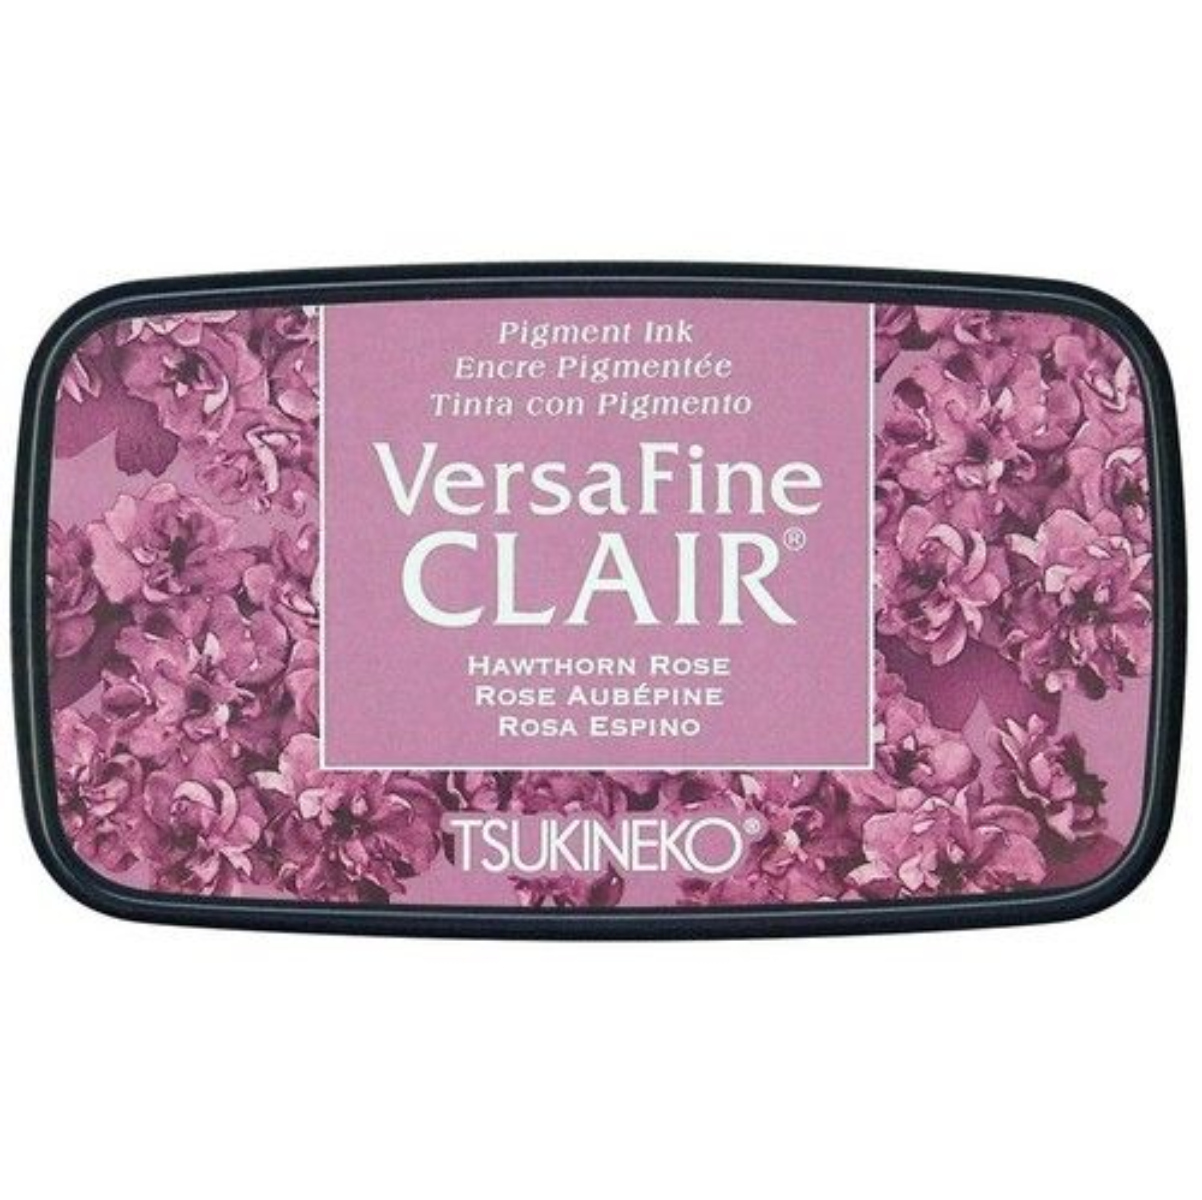 VersaFine Clair – Hawthorn Rose